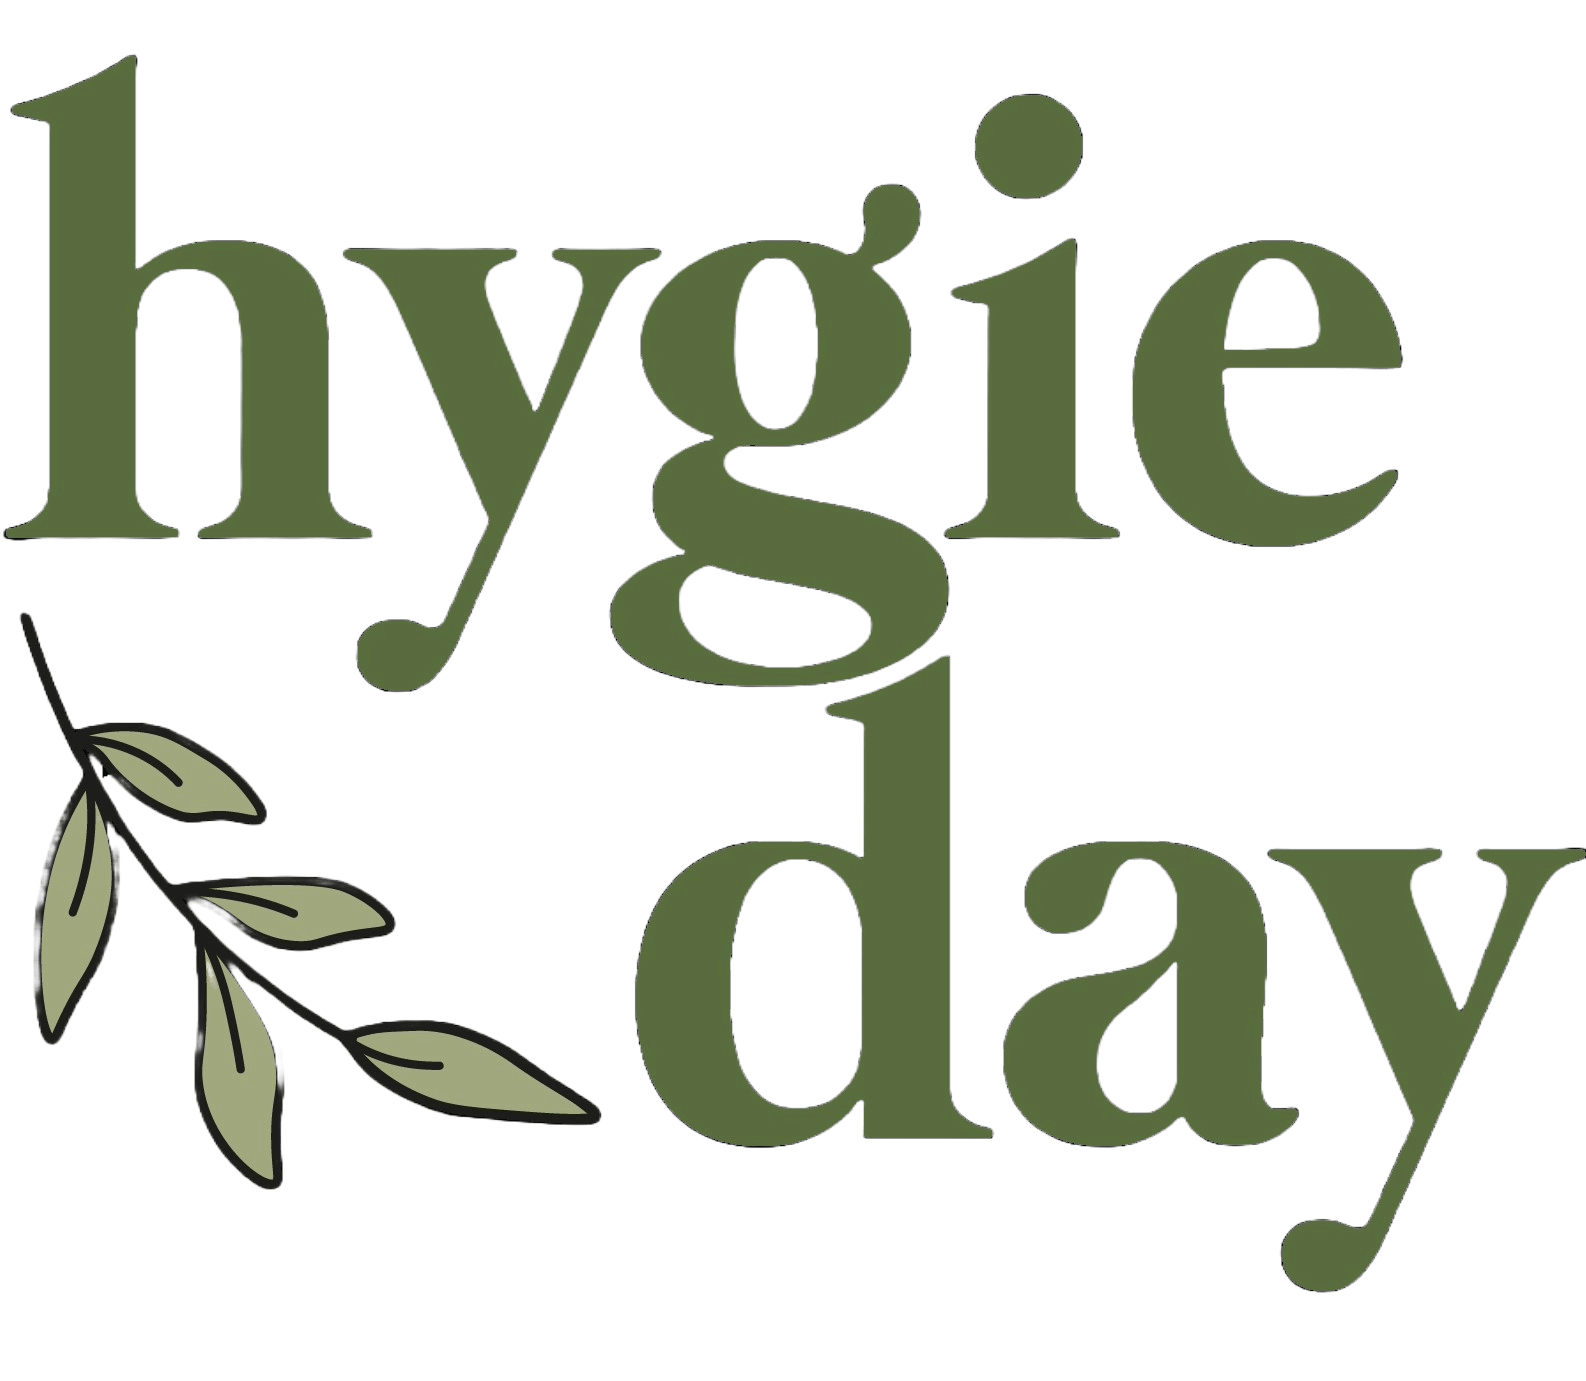 Hygie Day